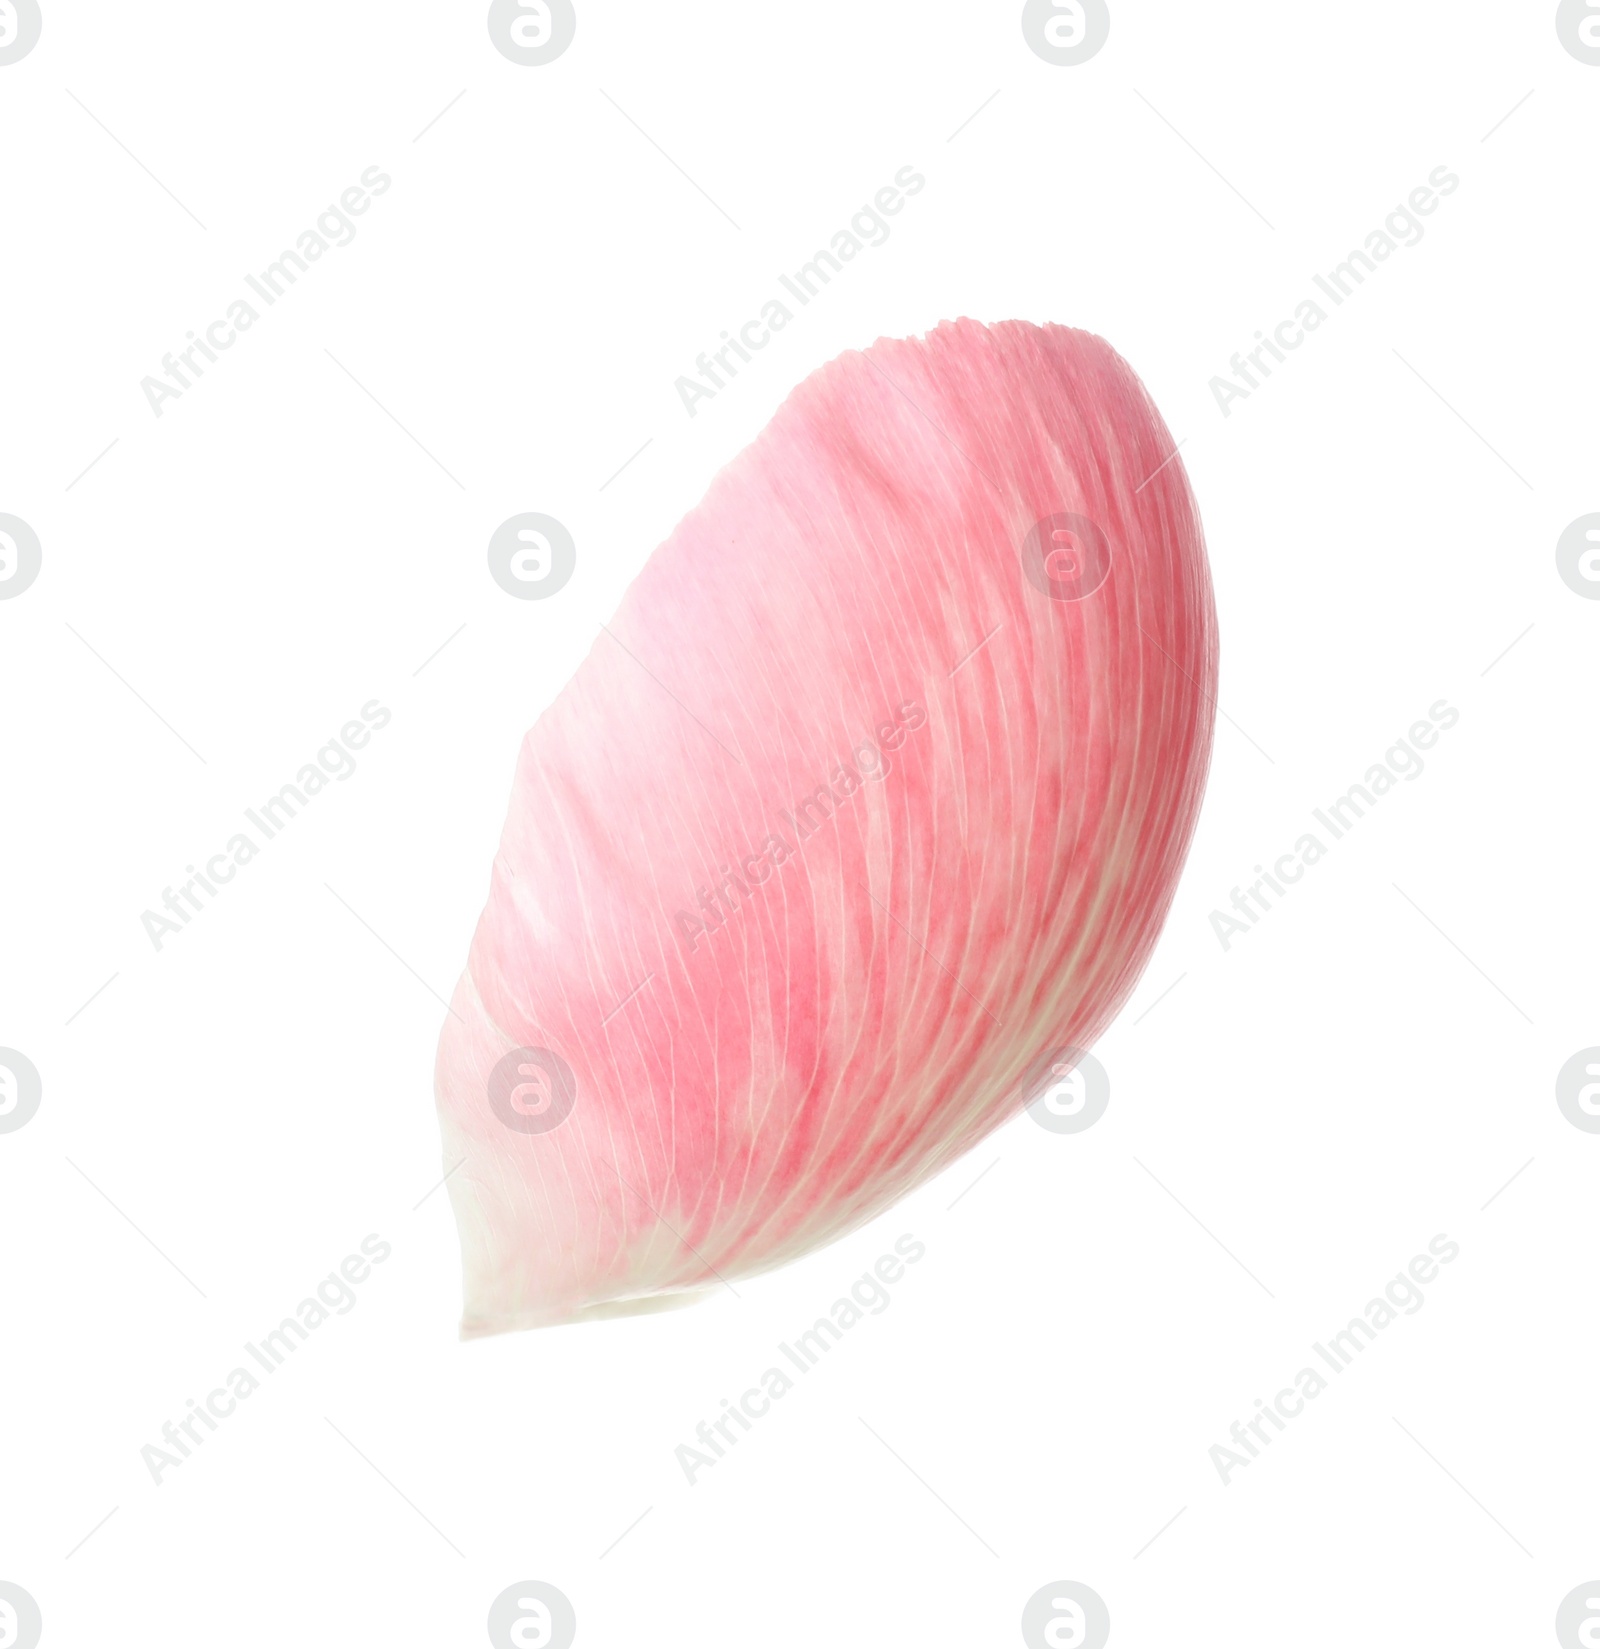 Photo of Beautiful pink peony petal isolated on white